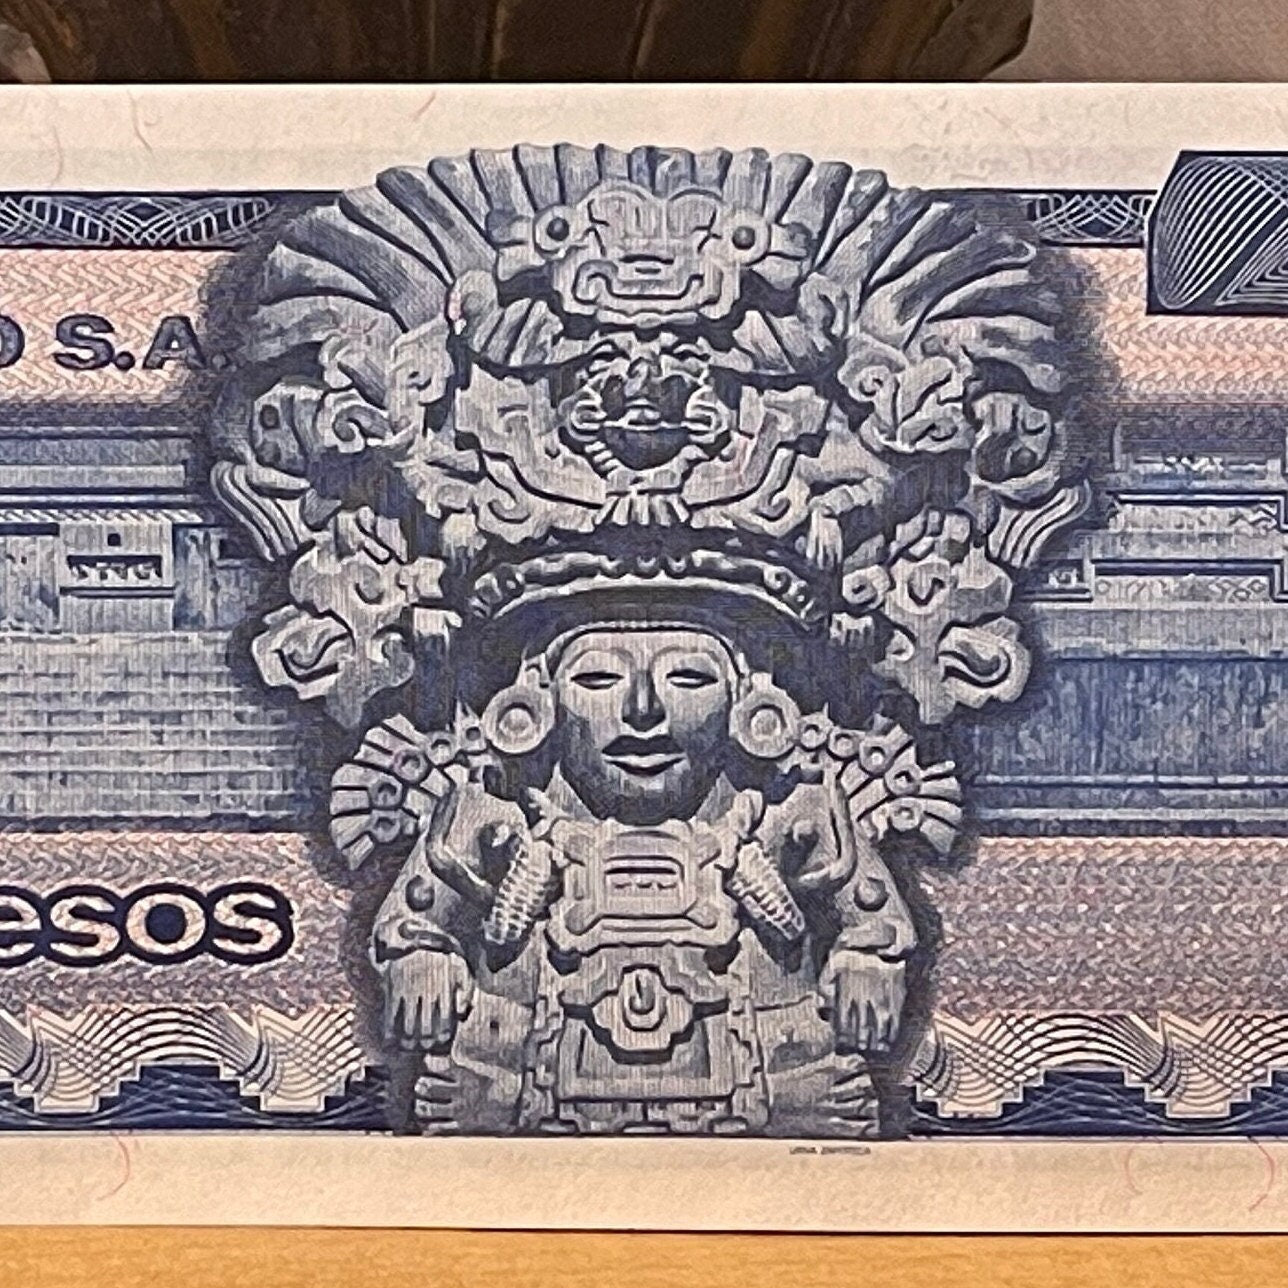 Zapotec Maize God of Abundant Sustenance Pitao Cozobi & Benito Juarez 50 Pesos Mexico Authentic Banknote Money for Collage (Oaxaca) (Palace)